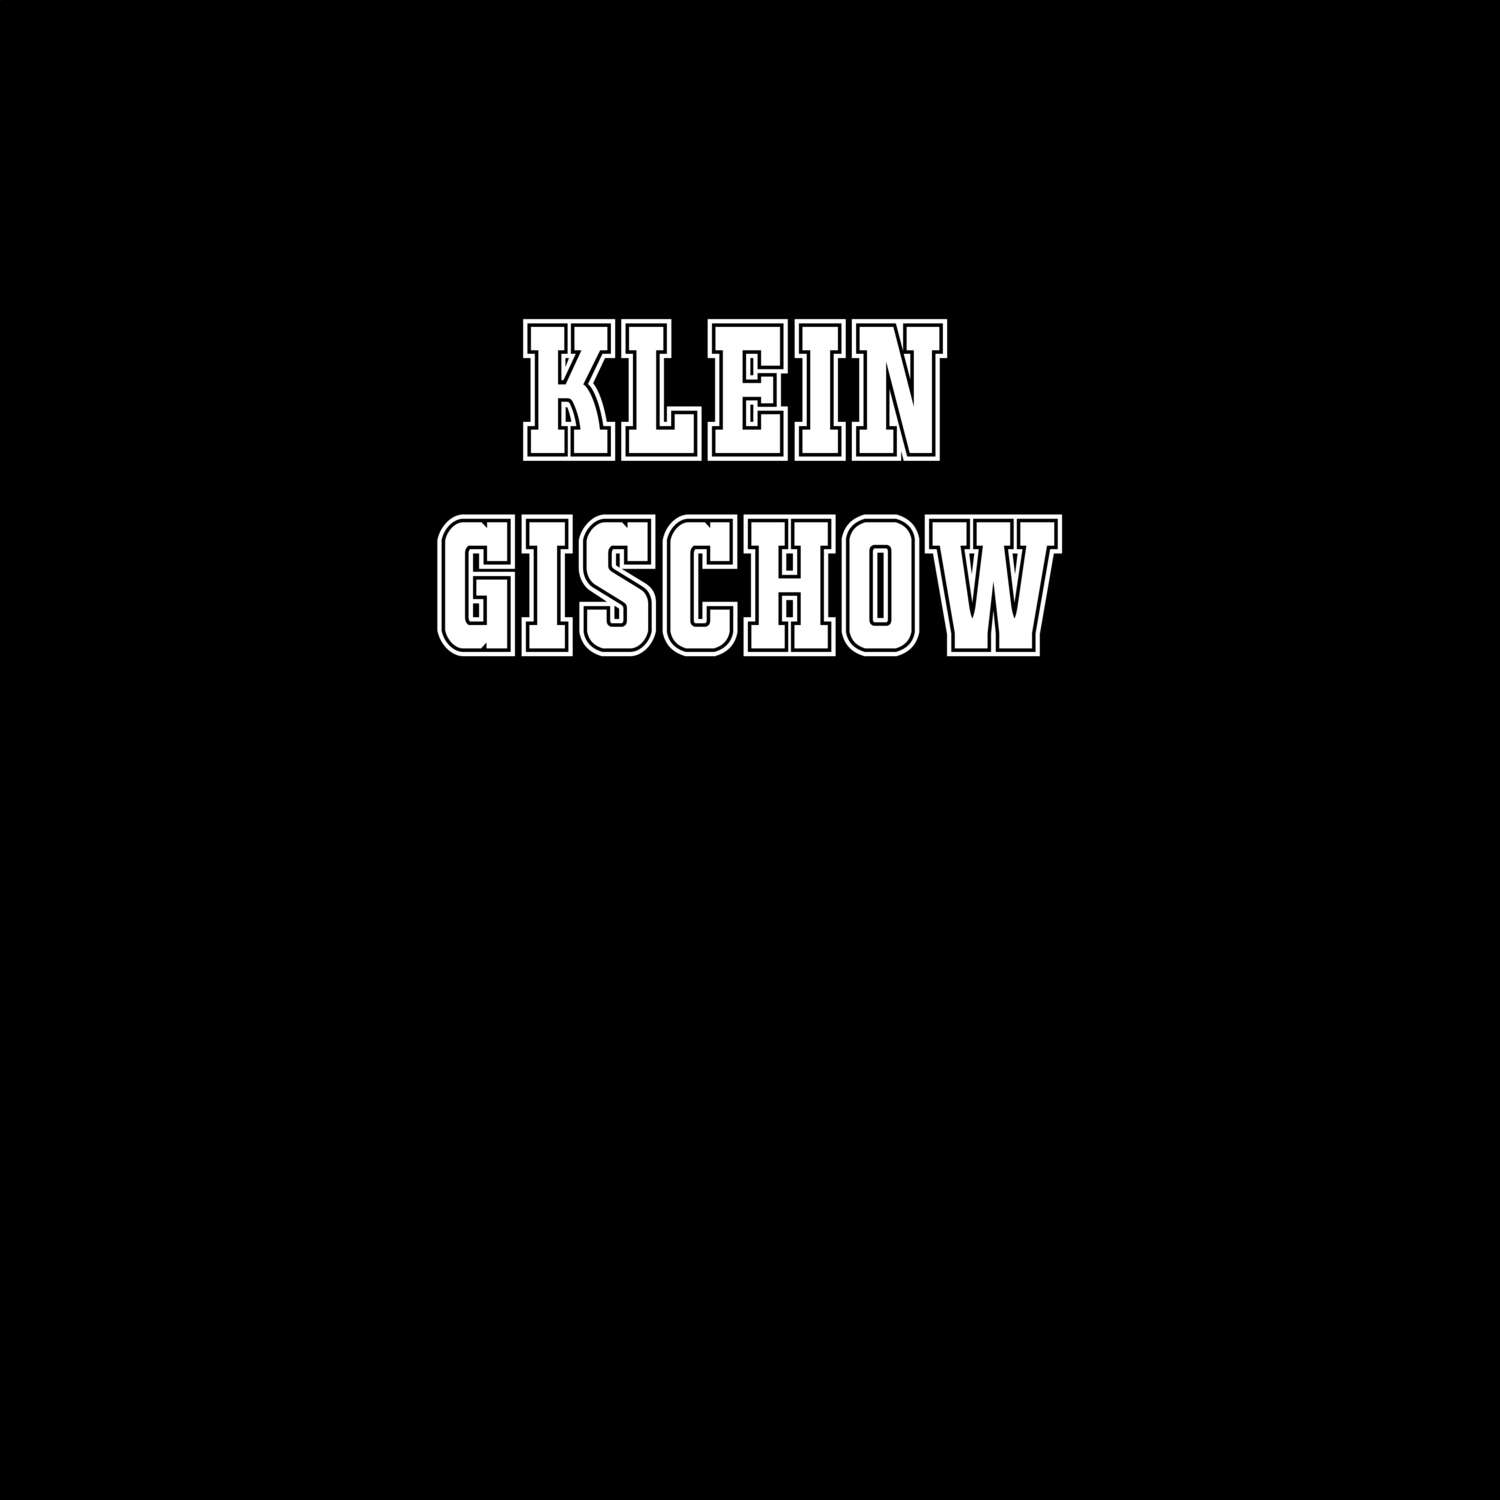 Klein Gischow T-Shirt »Classic«